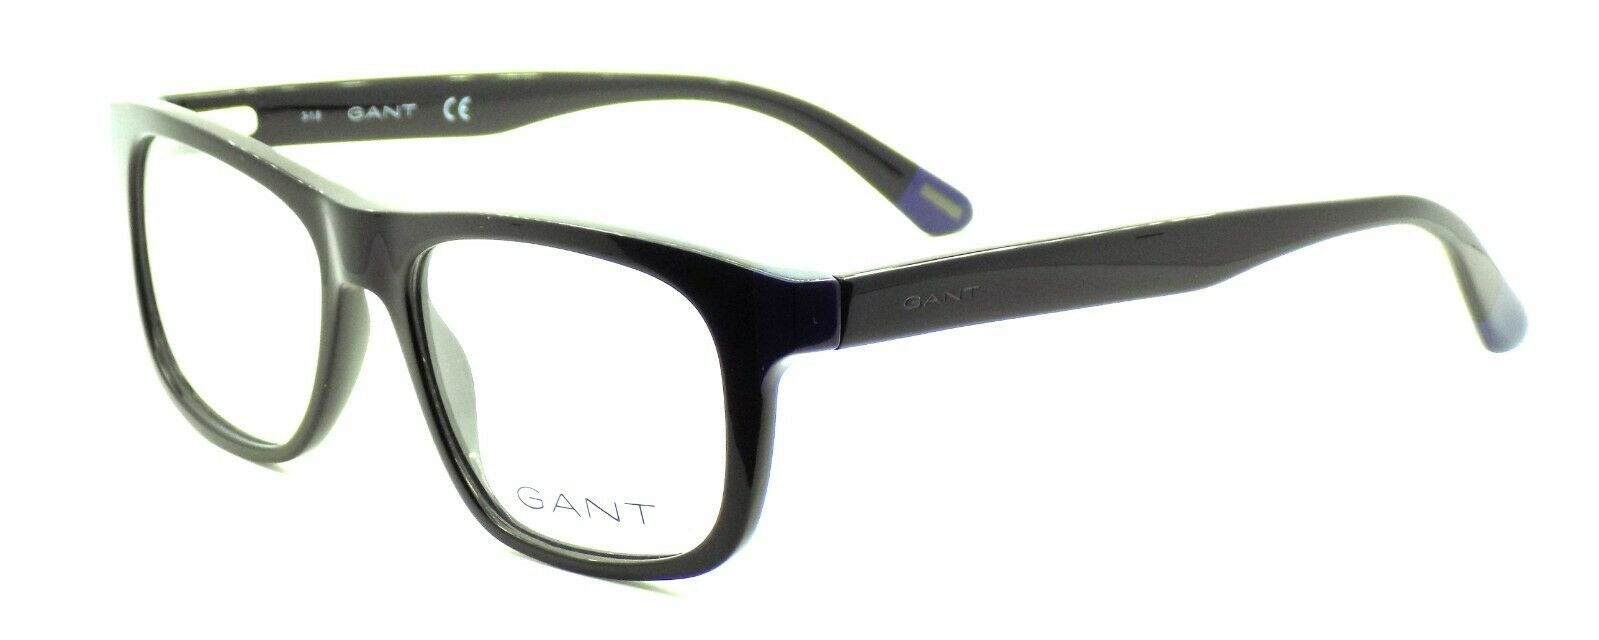 1-GANT GA3157 001 Men's Eyeglasses Frames 53-17-145 Black + CASE-664689916894-IKSpecs